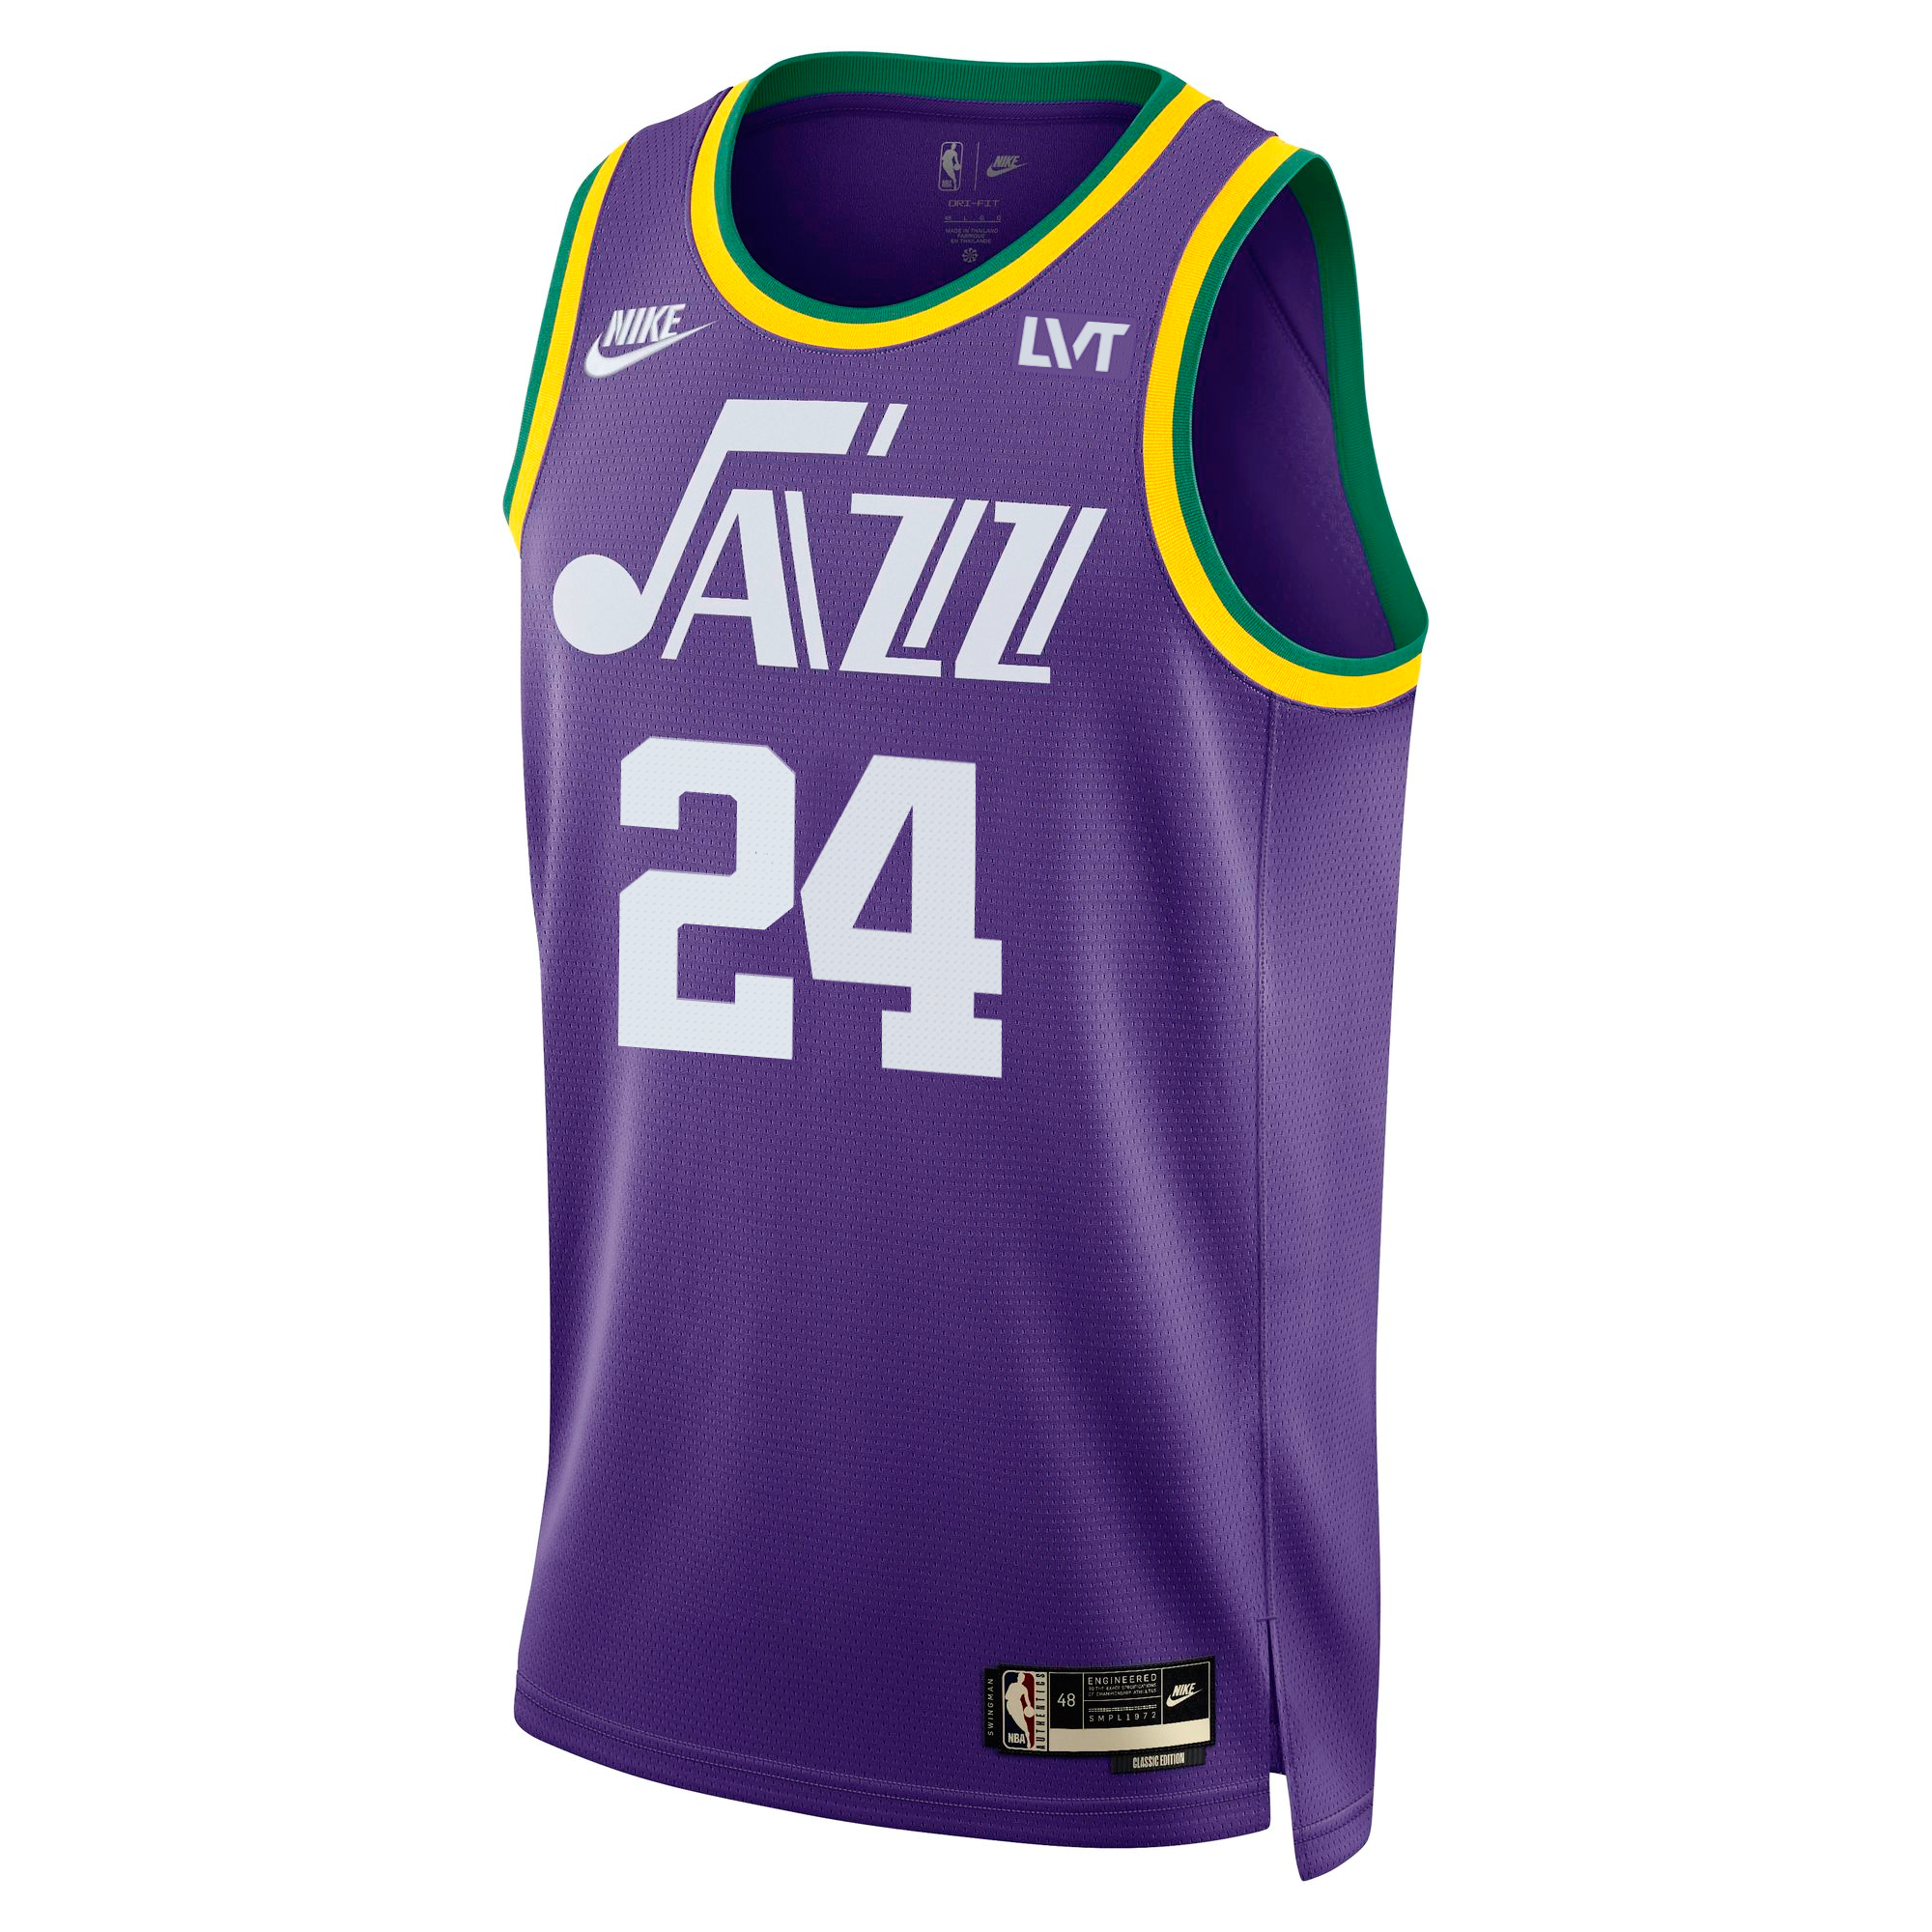 Utah Jazz - Get a 𝐅𝐑𝐄𝐄 Jazz jersey when you open a